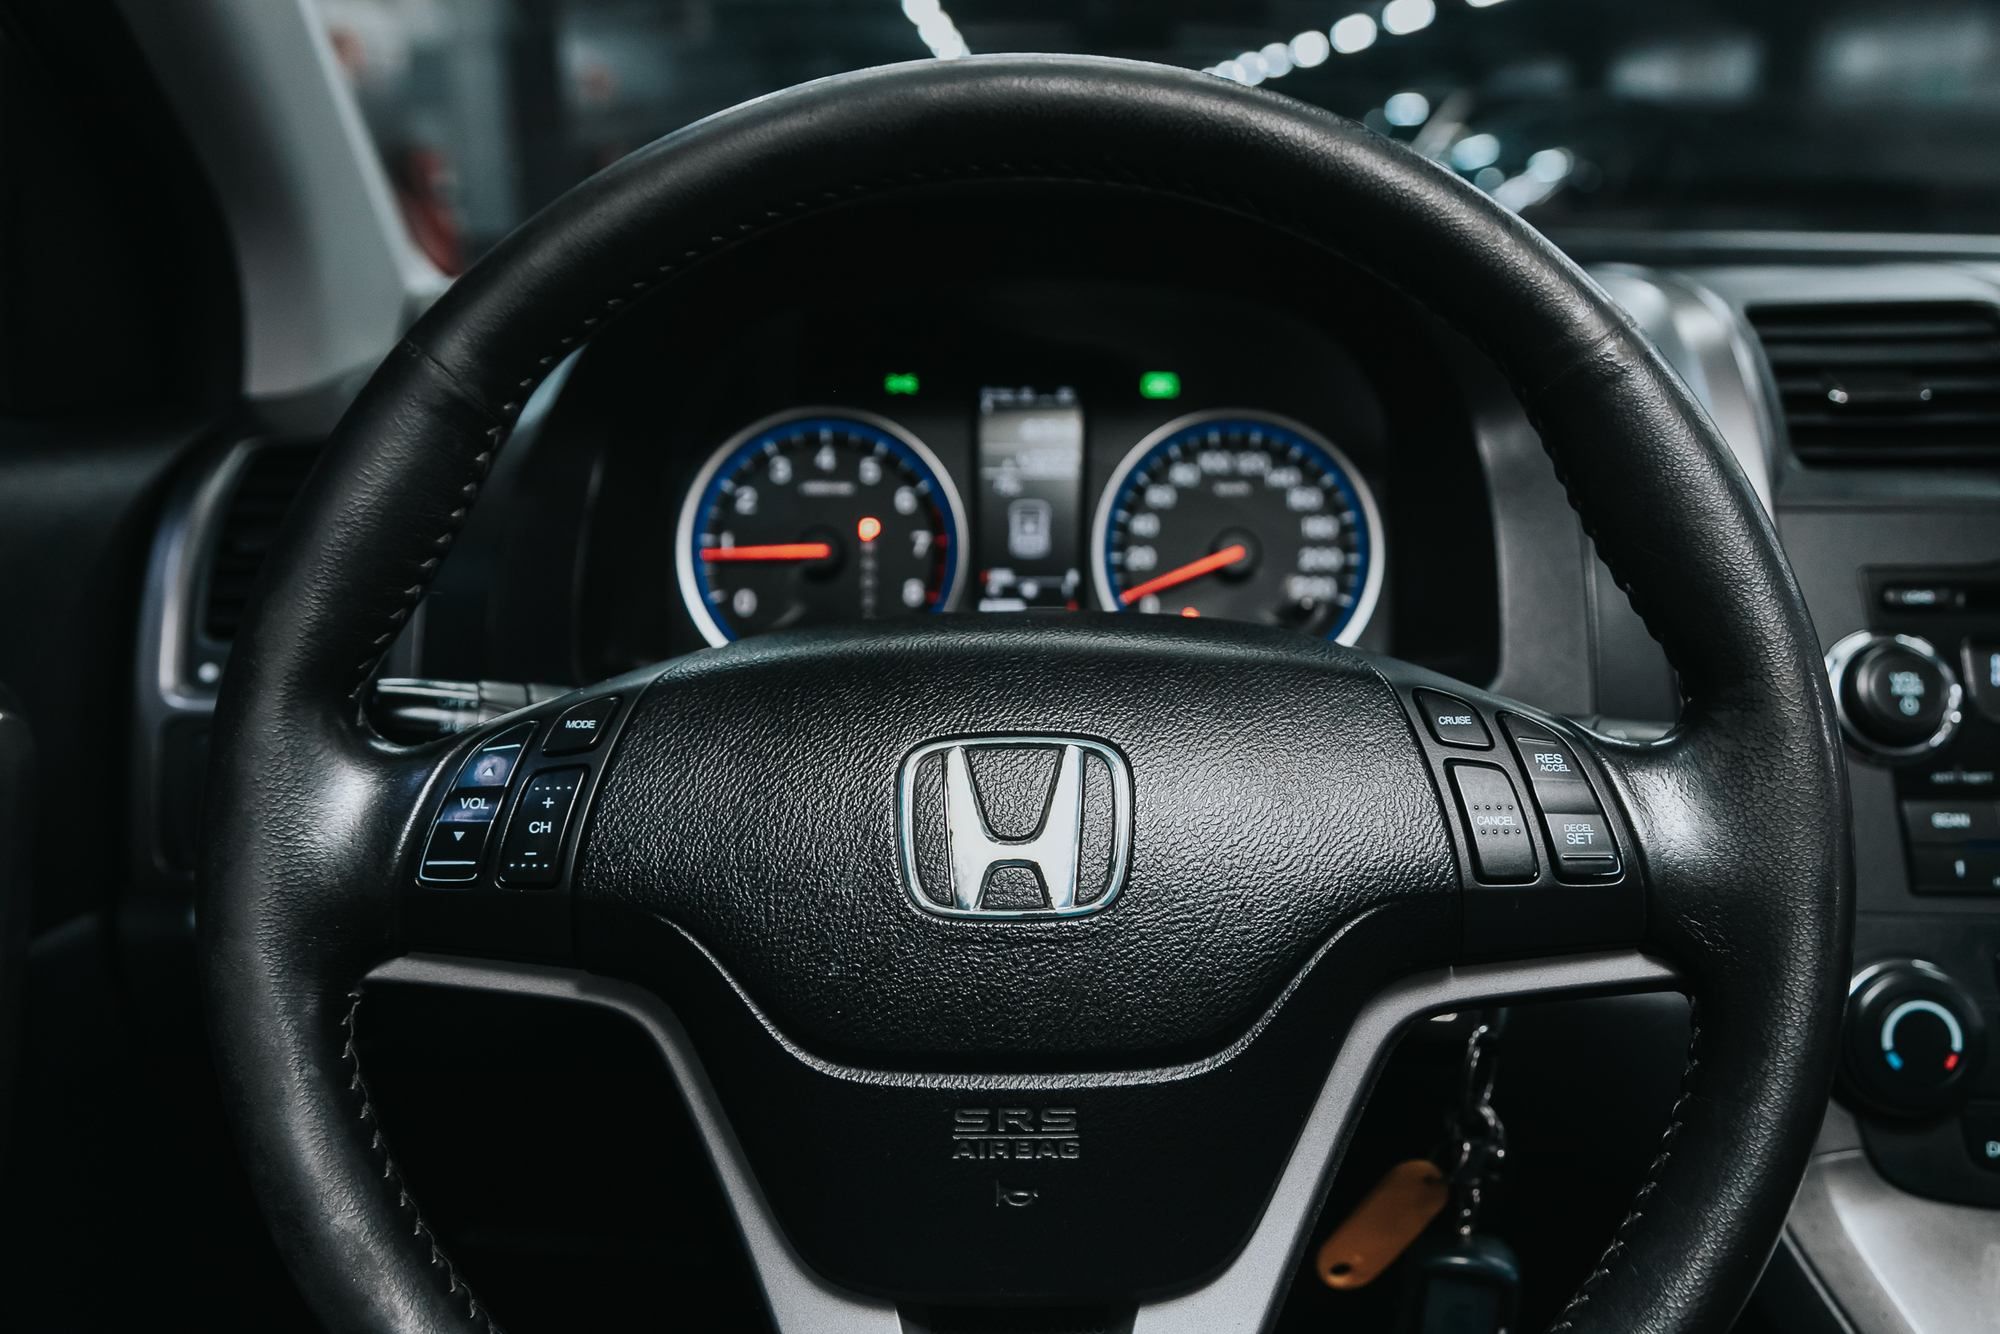 Honda steering wheel regarding the Honda recall worldwide 